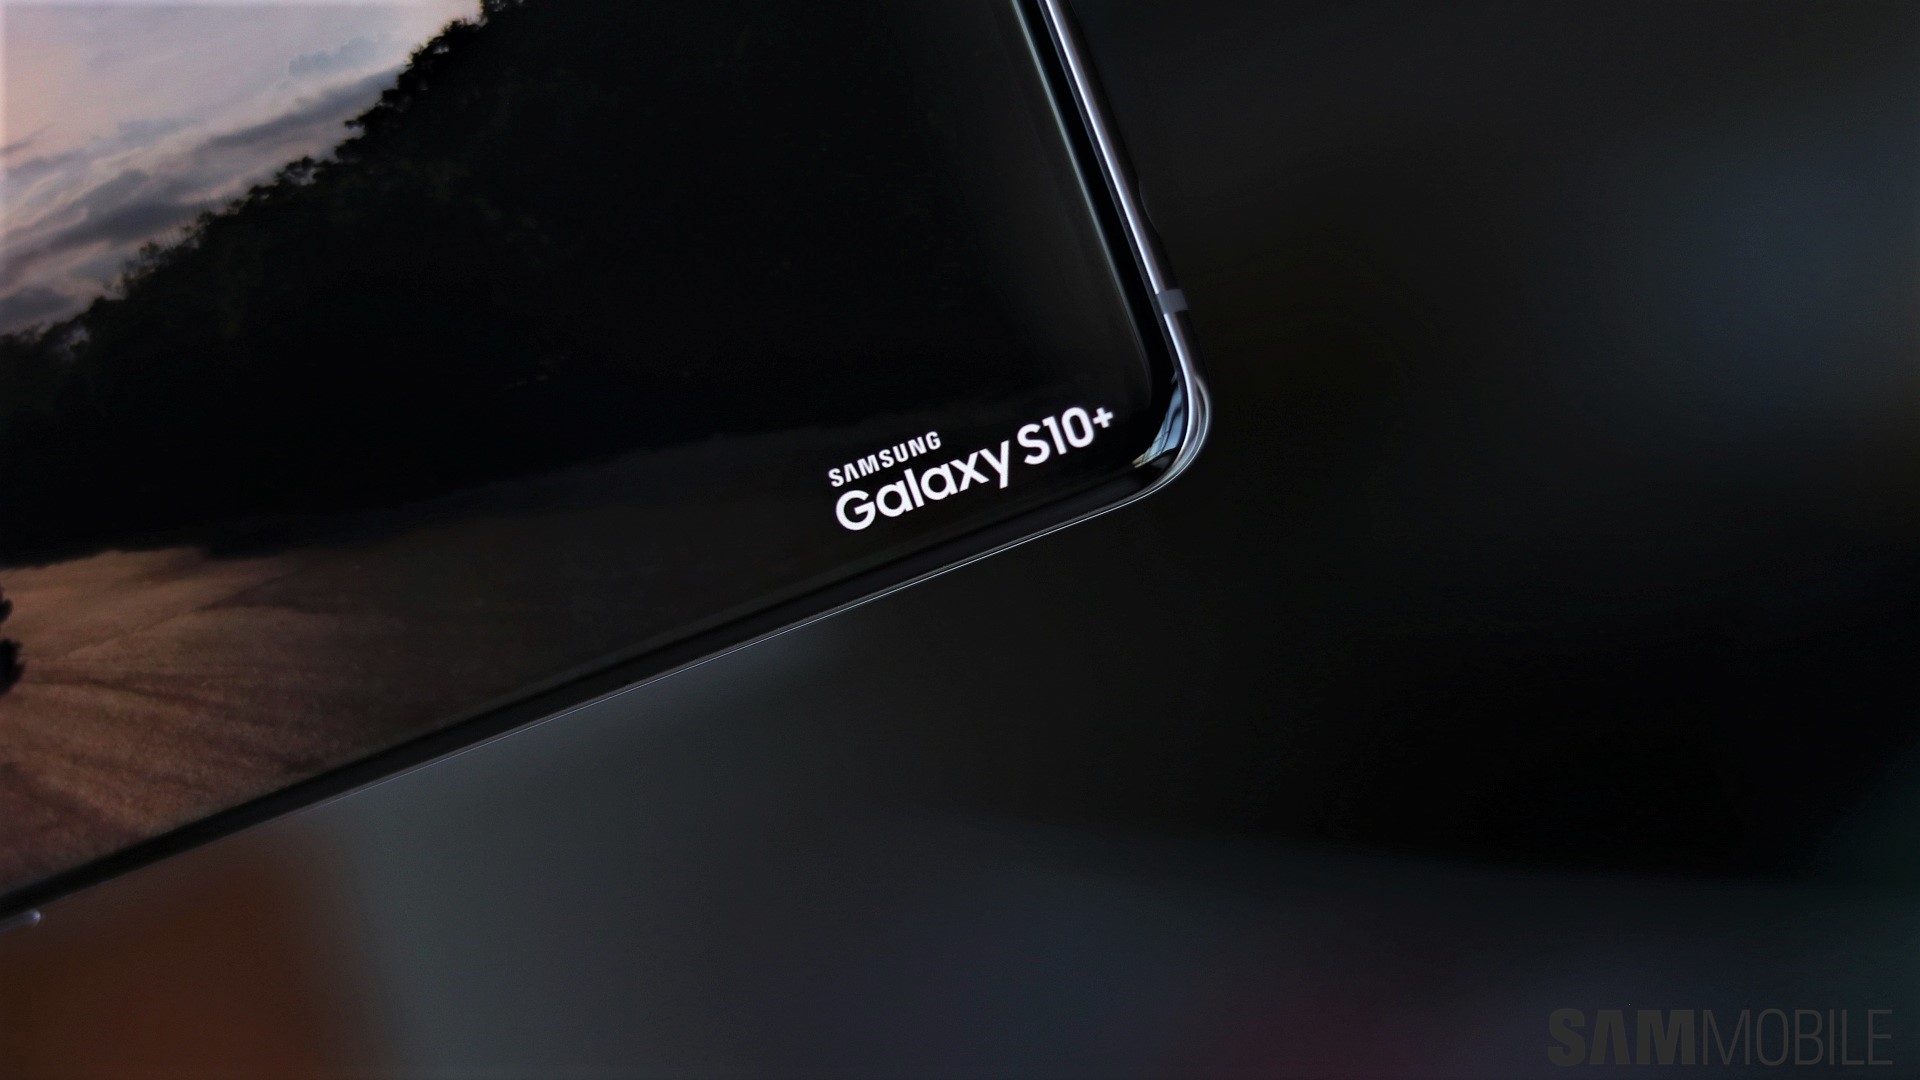 Samsung galaxy s21 черный